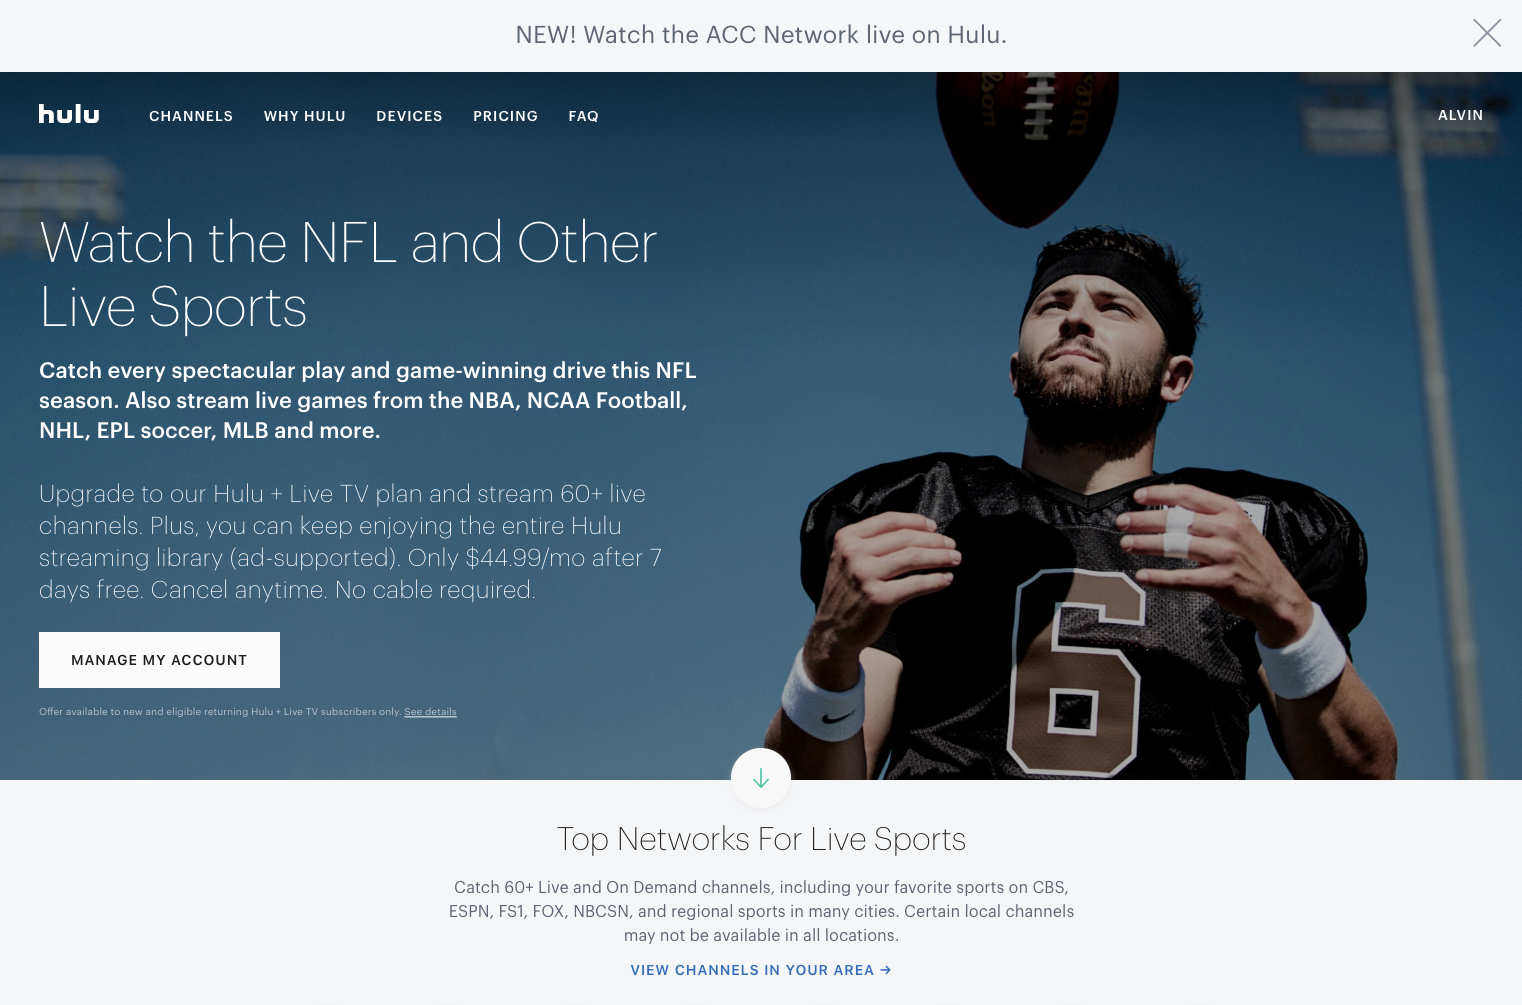 Hulu Has Live Sports Campaign (VIDEO) — Alvin Starks